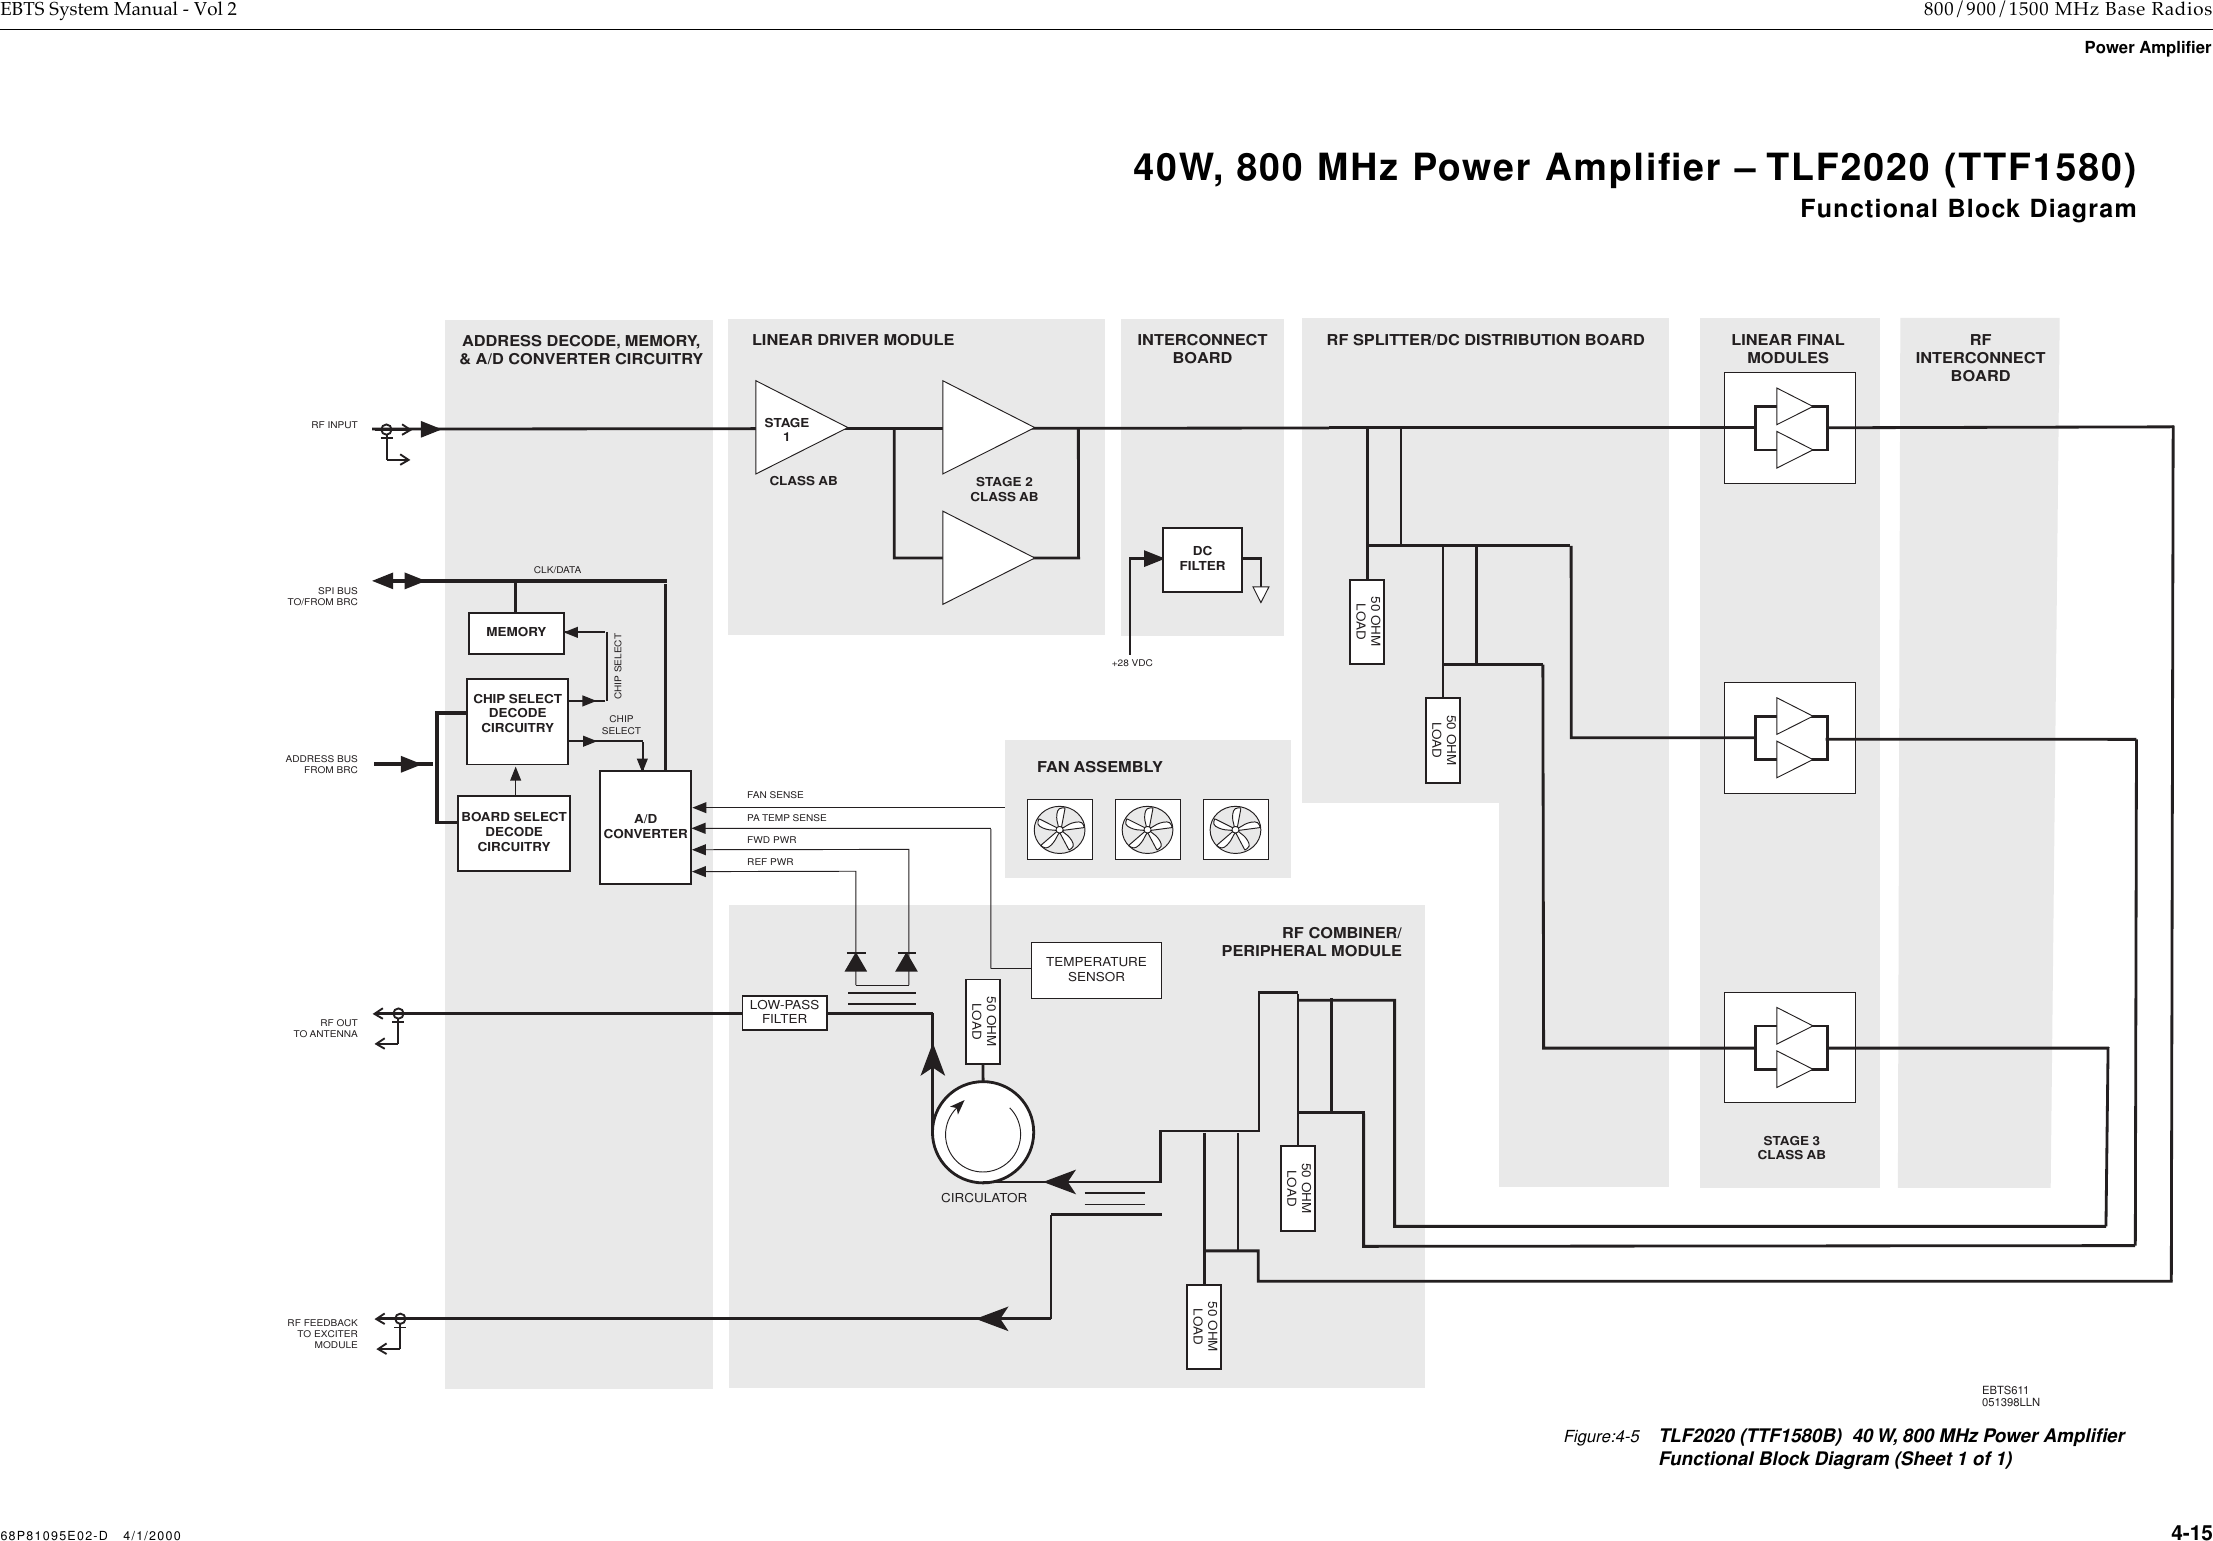  68P81095E02-D   4/1/2000 4-15 EBTS System Manual - Vol 2 800/900/1500 MHz Base Radios Power Amplifier 4DCFILTERADDRESS BUSFROM BRCSPI BUSTO/FROM BRCADDRESS DECODE, MEMORY,&amp; A/D CONVERTER CIRCUITRYMEMORYBOARD SELECTDECODECIRCUITRYCHIPSELECTCHIP SELECTDECODECIRCUITRYCHIP SELECTRF INPUTRF OUTTO ANTENNARF FEEDBACKTO EXCITERMODULEEBTS611051398LLNCLK/DATAA/DCONVERTERLINEAR DRIVER MODULECLASS AB STAGE 2CLASS ABINTERCONNECTBOARD+28 VDCPA TEMP SENSERF COMBINER/PERIPHERAL MODULELOW-PASSFILTERREF PWRFWD PWRFAN SENSETEMPERATURESENSORCIRCULATOR50 OHMLOAD50 OHMLOAD50 OHMLOADFAN ASSEMBLYRFINTERCONNECTBOARDLINEAR FINALMODULESRF SPLITTER/DC DISTRIBUTION BOARDSTAGE 3CLASS AB50 OHMLOAD50 OHMLOADSTAGE1Figure:4-5TLF2020 (TTF1580B)  40 W, 800 MHz Power Ampliﬁer Functional Block Diagram (Sheet 1 of 1)40W, 800 MHz Power Ampliﬁer – TLF2020 (TTF1580)Functional Block Diagram